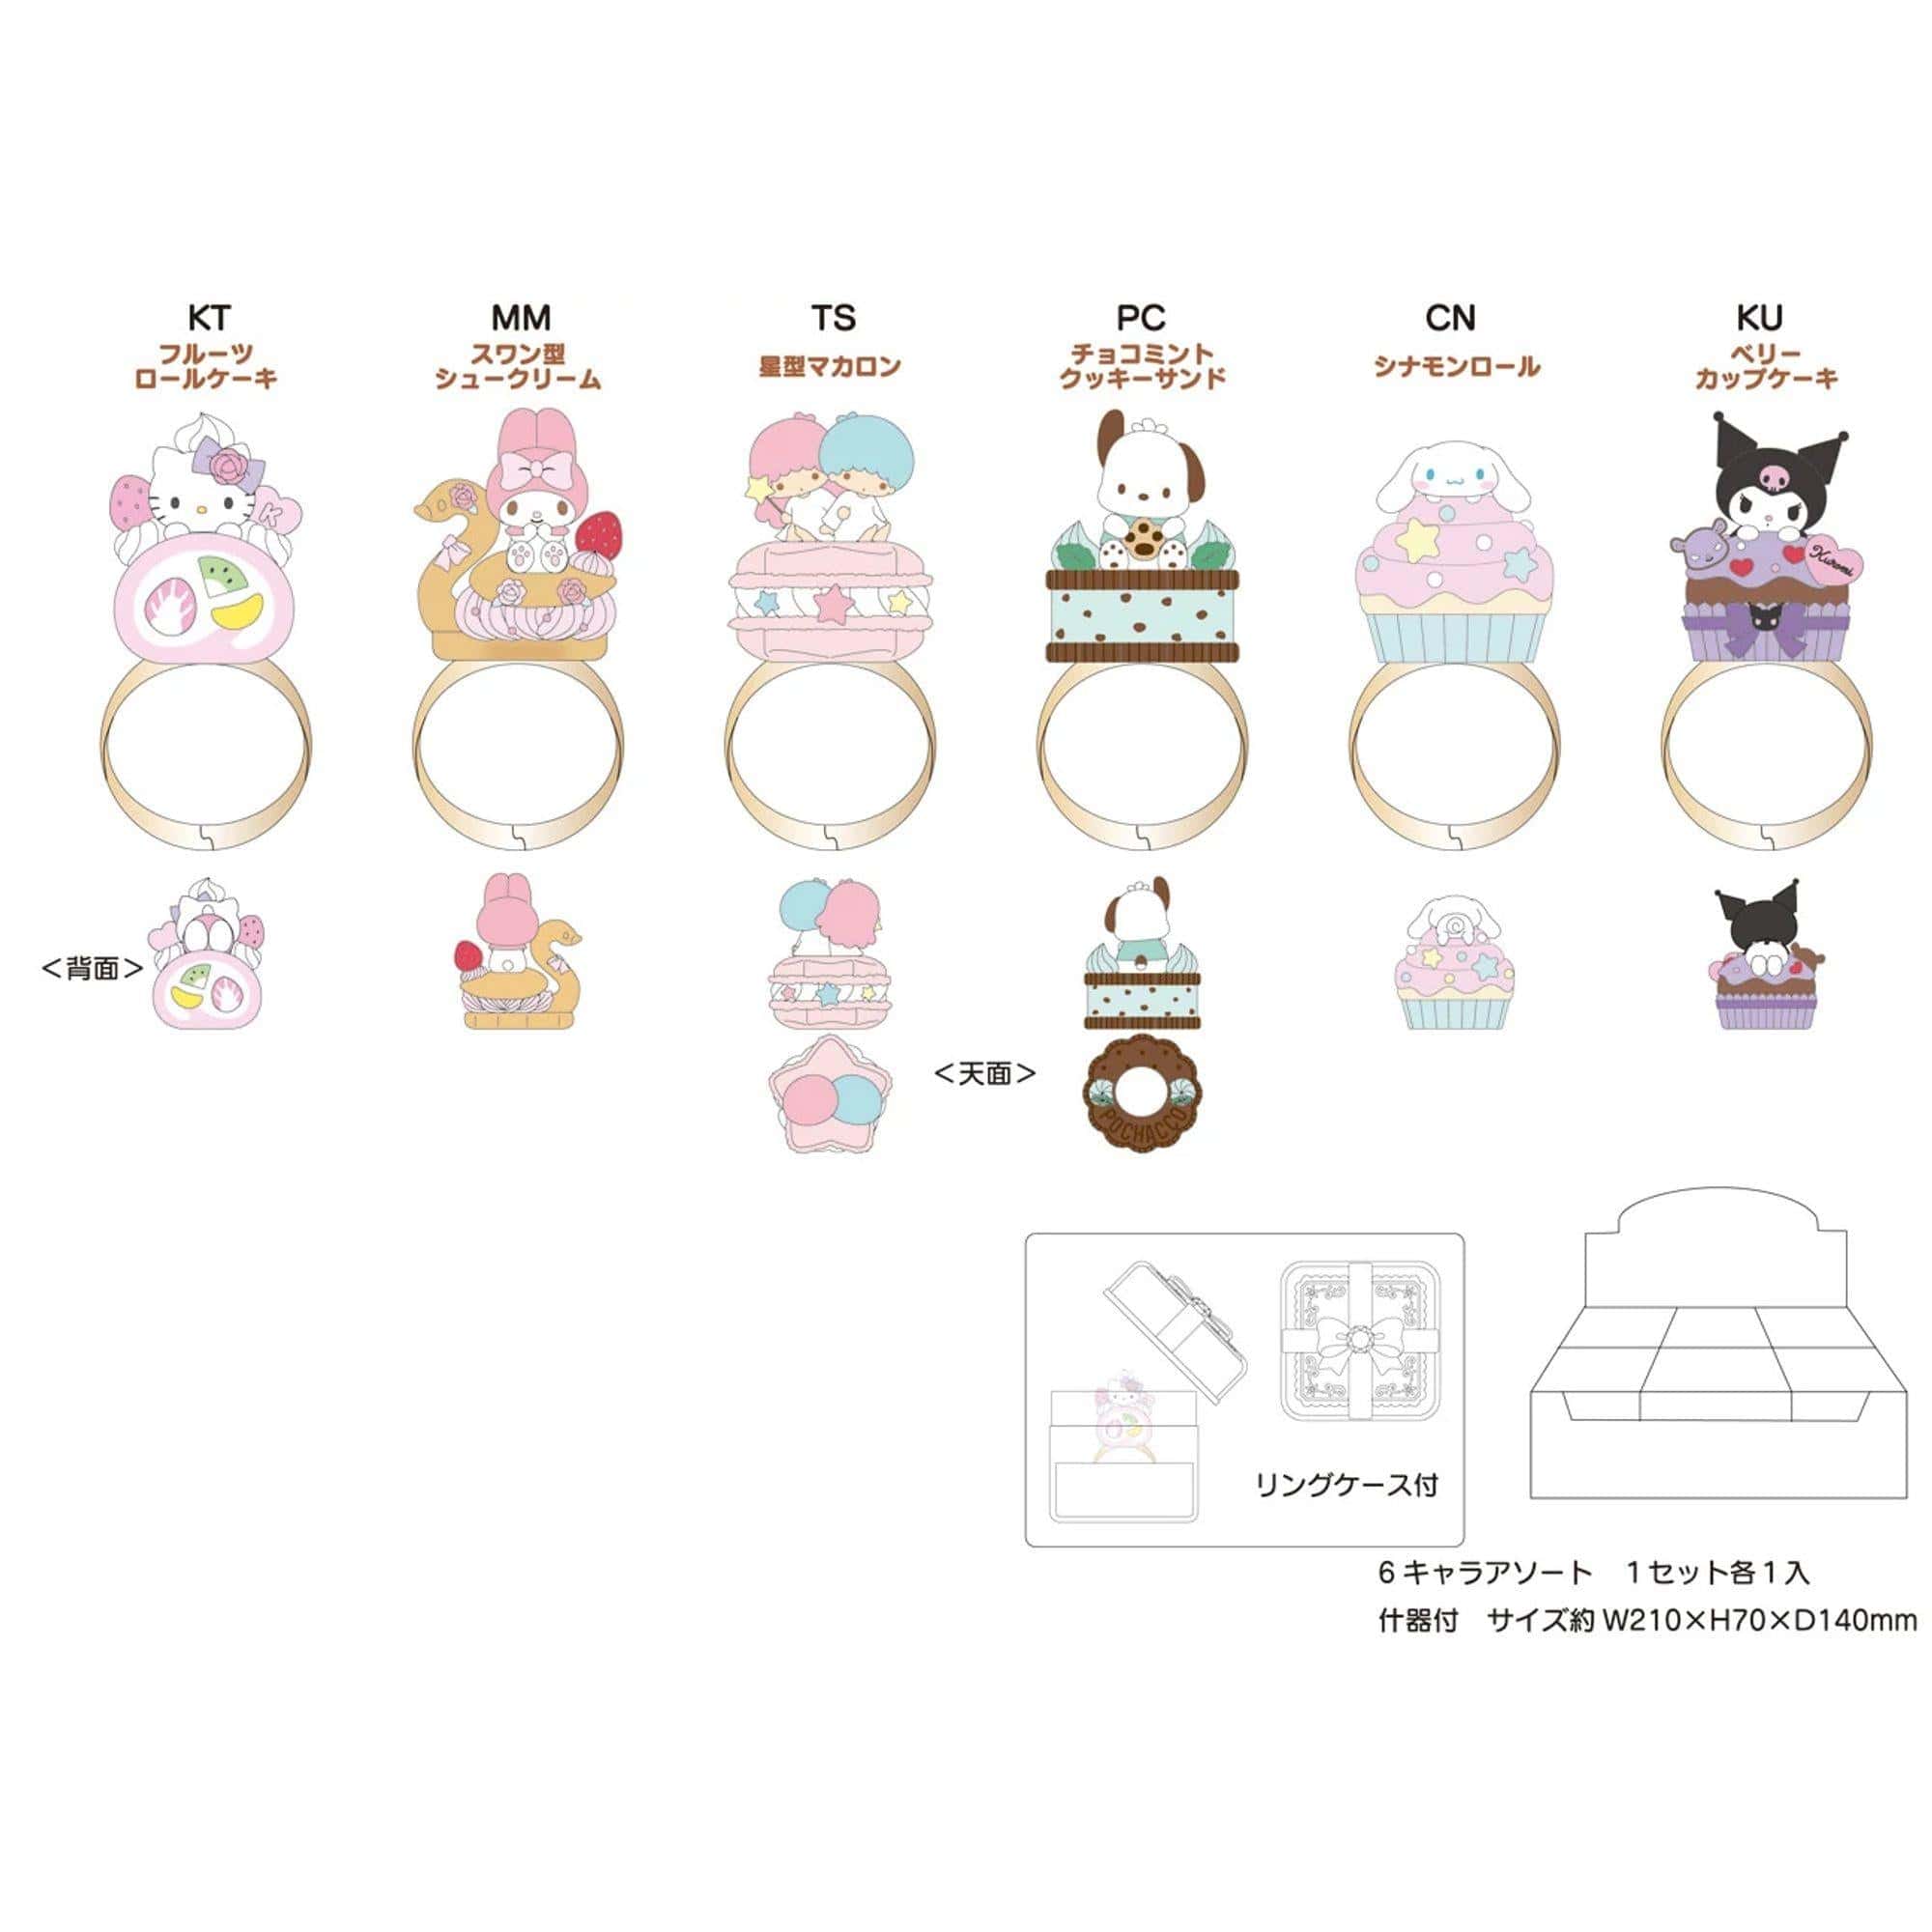 Enesco Surprise Sanrio Ring Kawaii Gifts 4550337765333